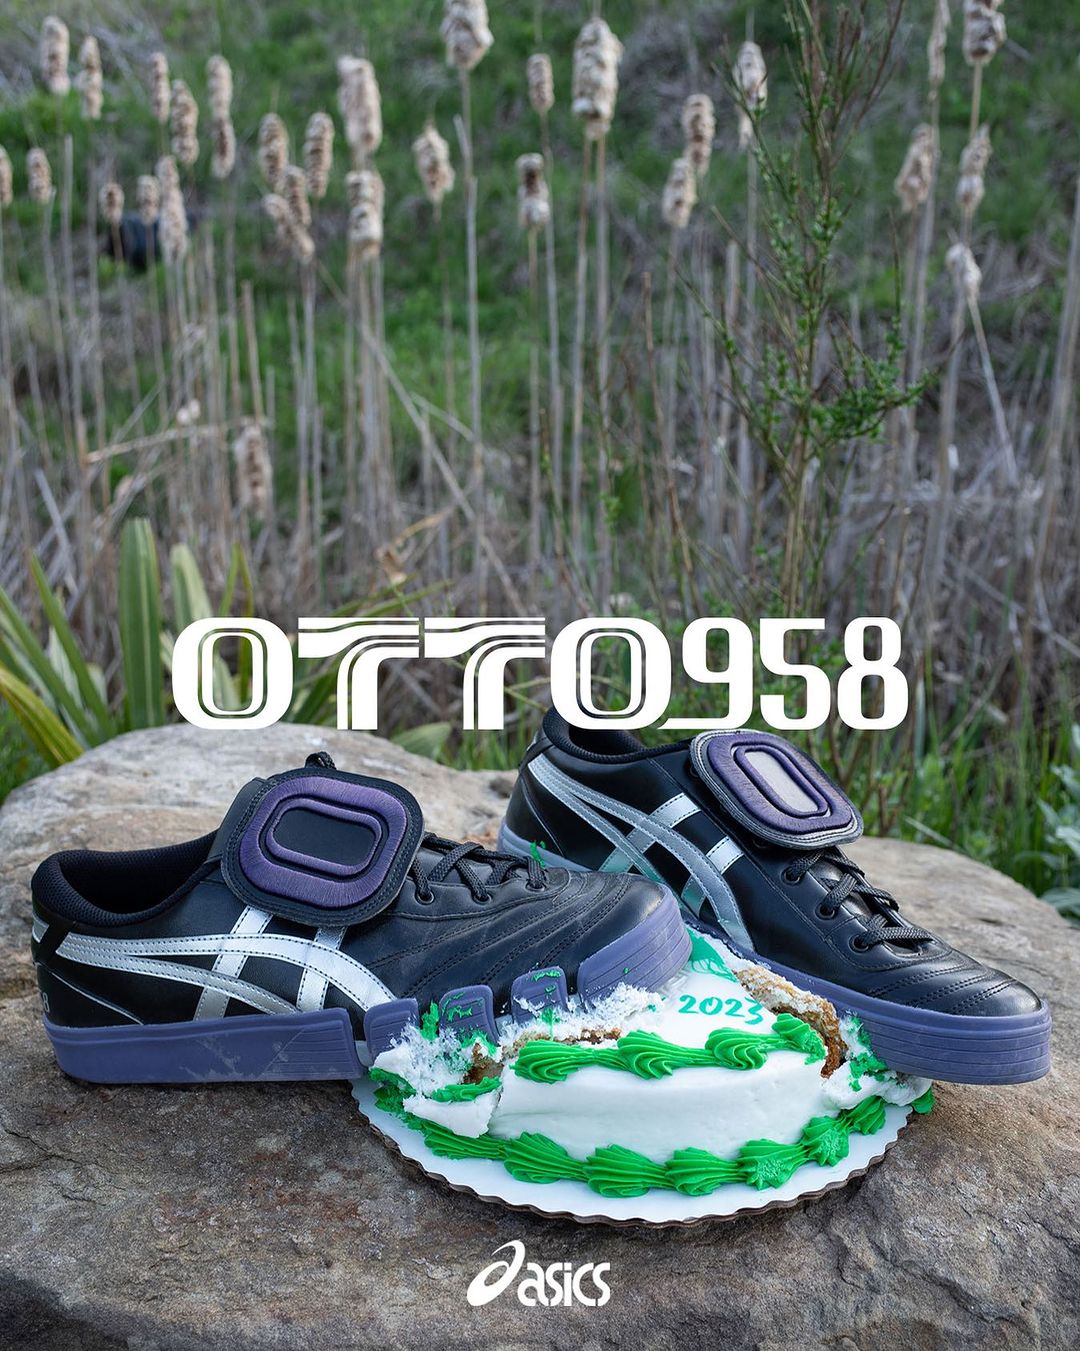 【KIKO KOSTADINOV×ASICS】<br>万众瞩目的 OTTO 958 联名鞋款将于 11 月 24 日周五 20:00 线上发售！